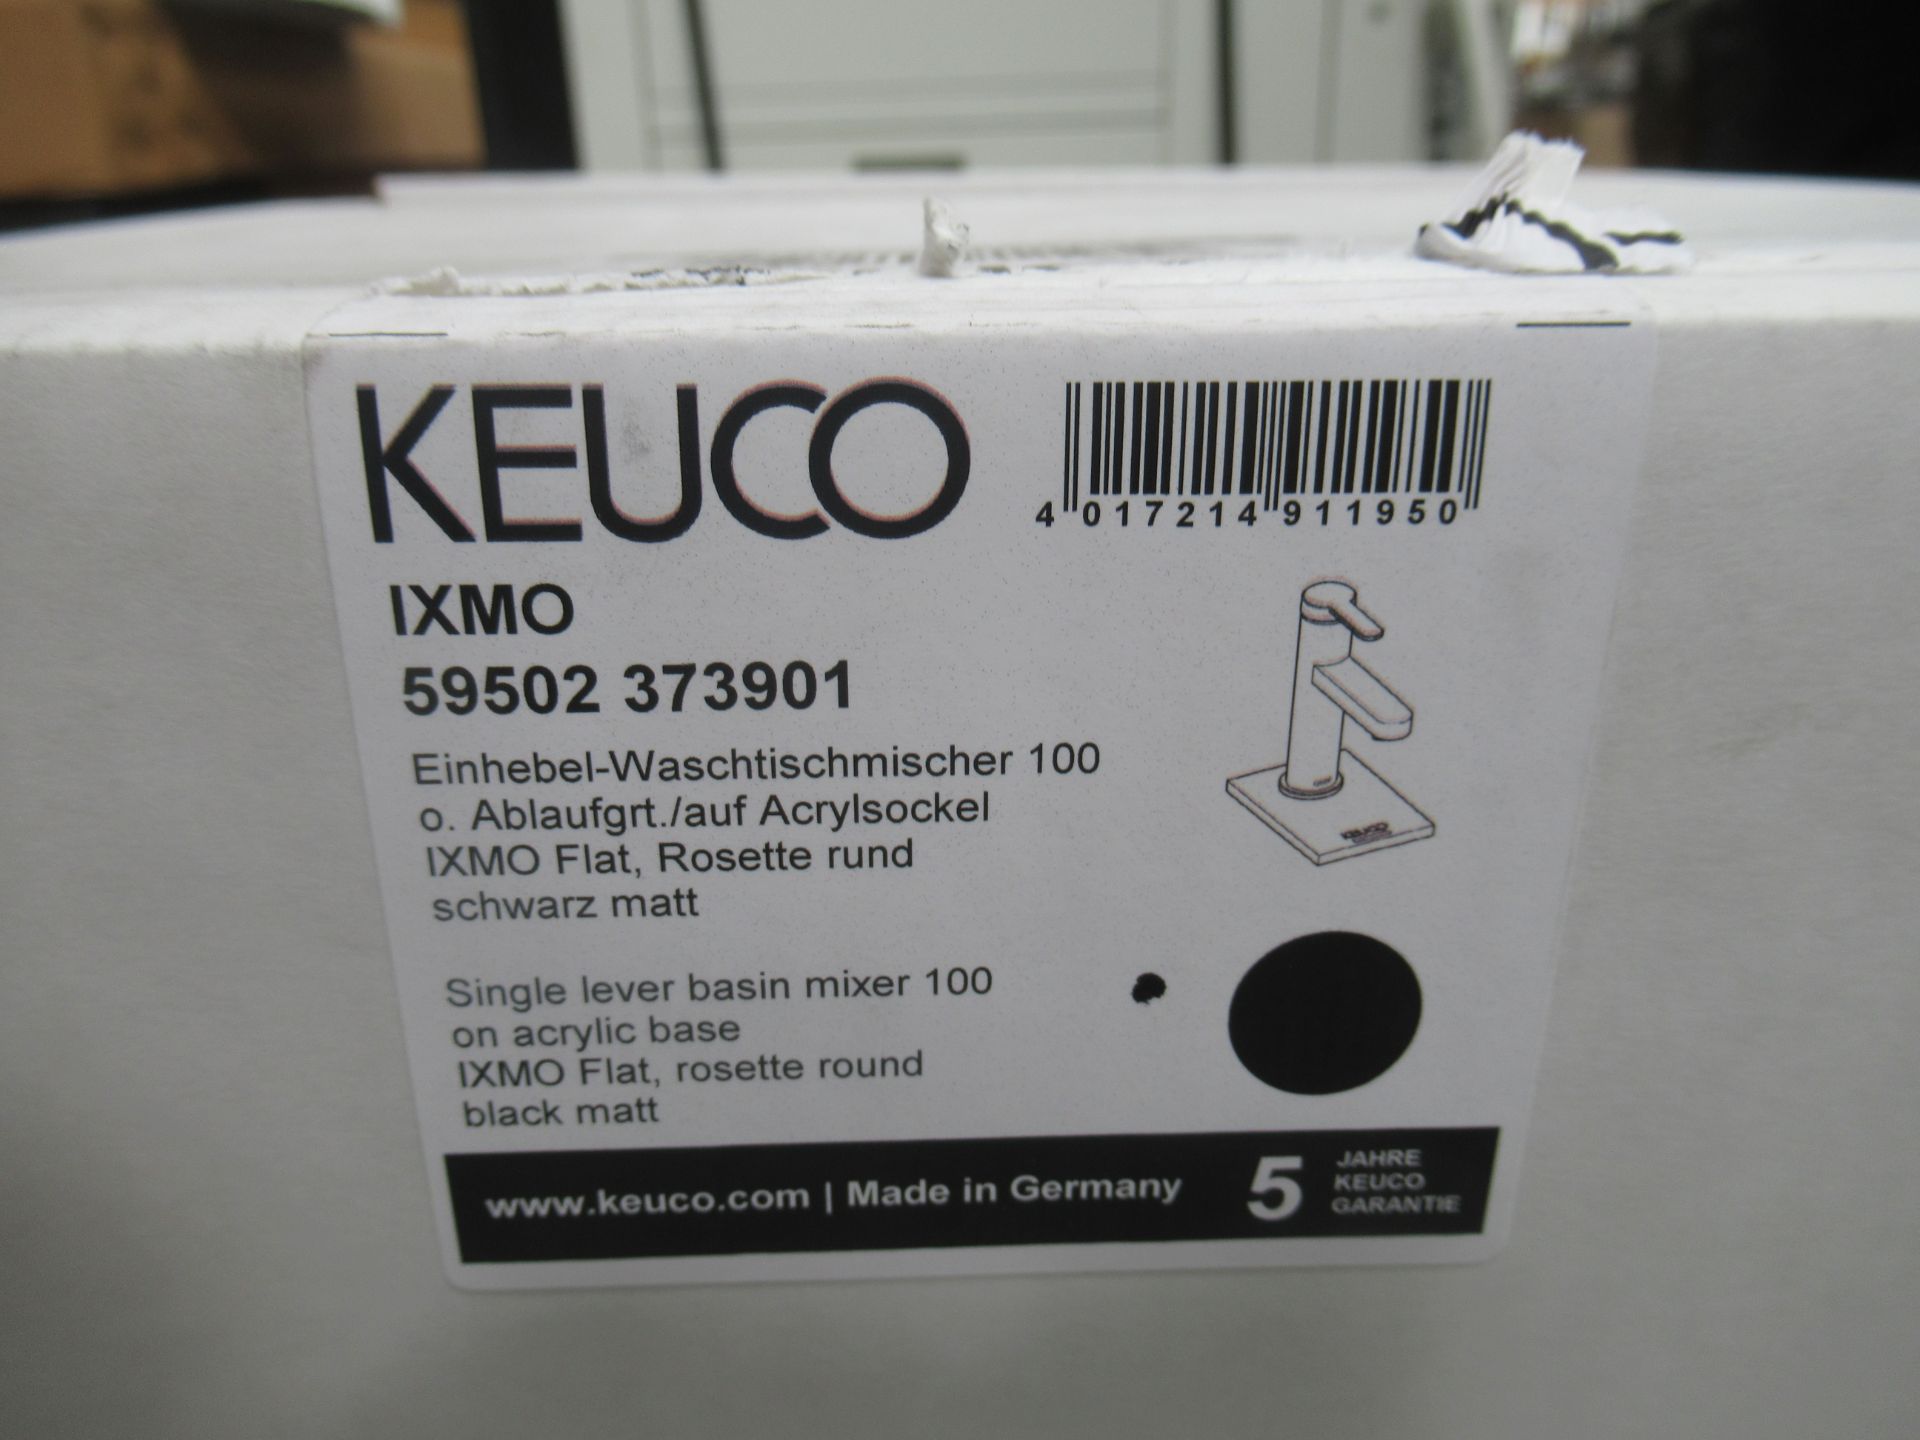 A Keuco IXMO Single Lever Basin Mixer 100-Tap,. Black Matt, P/N 59502-373901 - Image 2 of 3